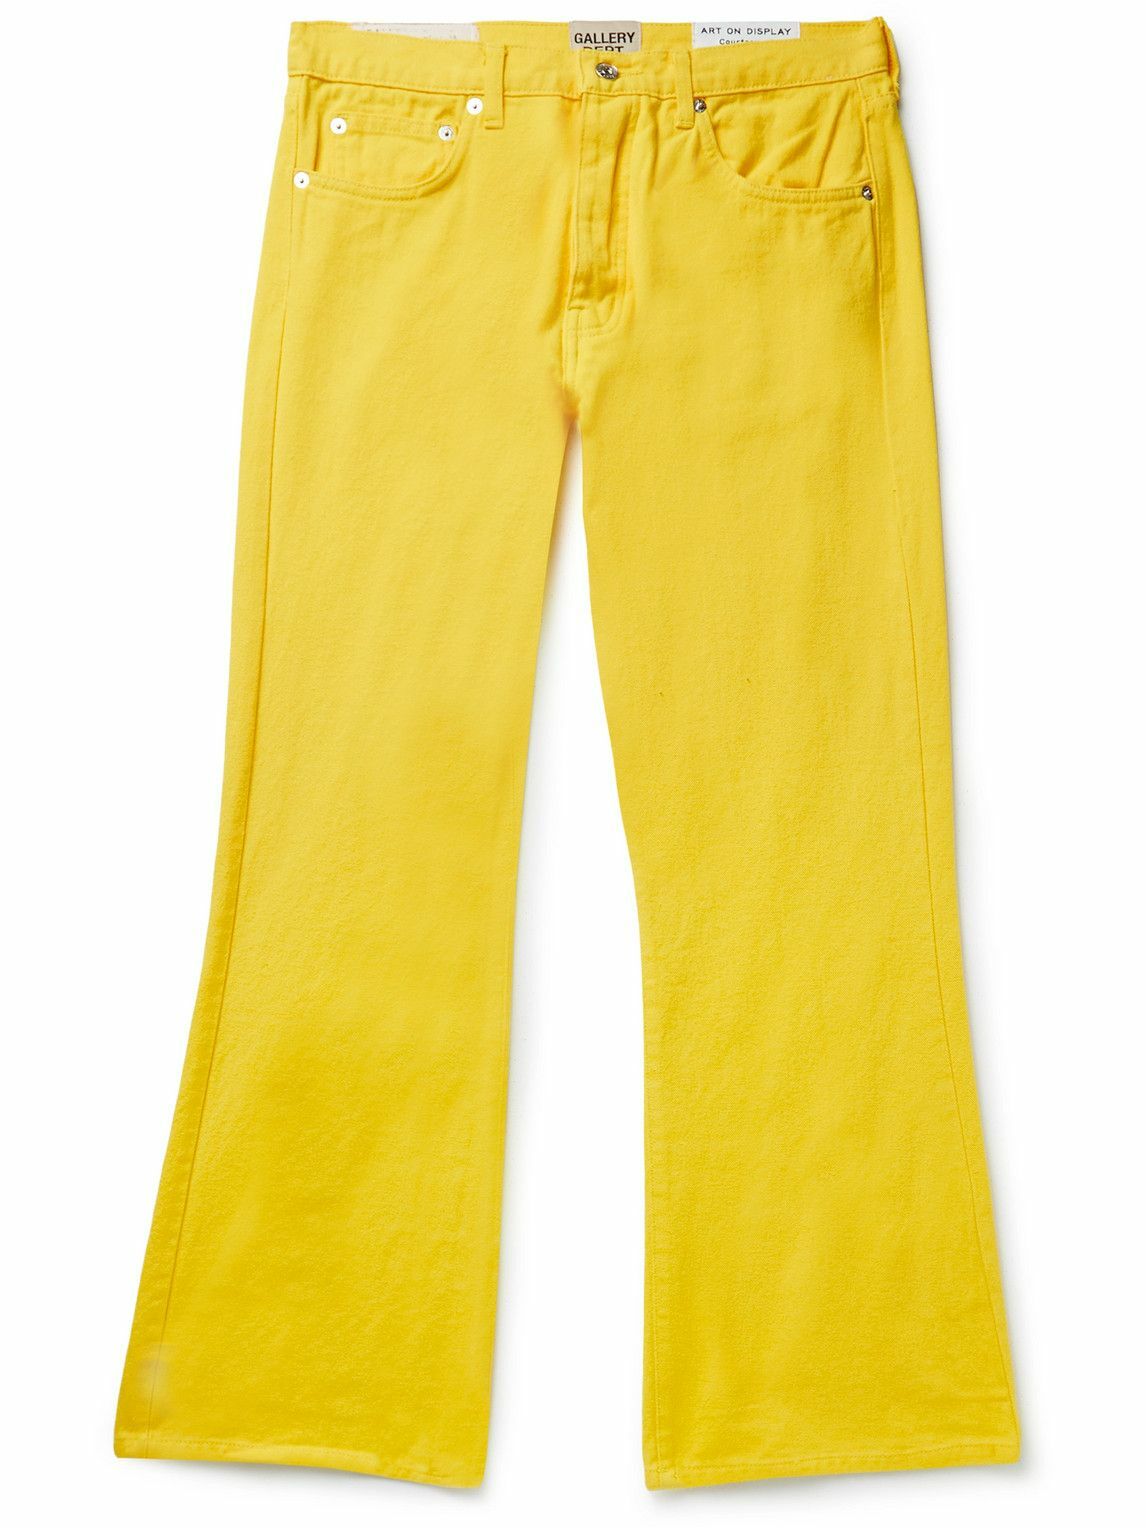 Gallery Dept. - Logan Bootcut Jeans - Yellow Gallery Dept.